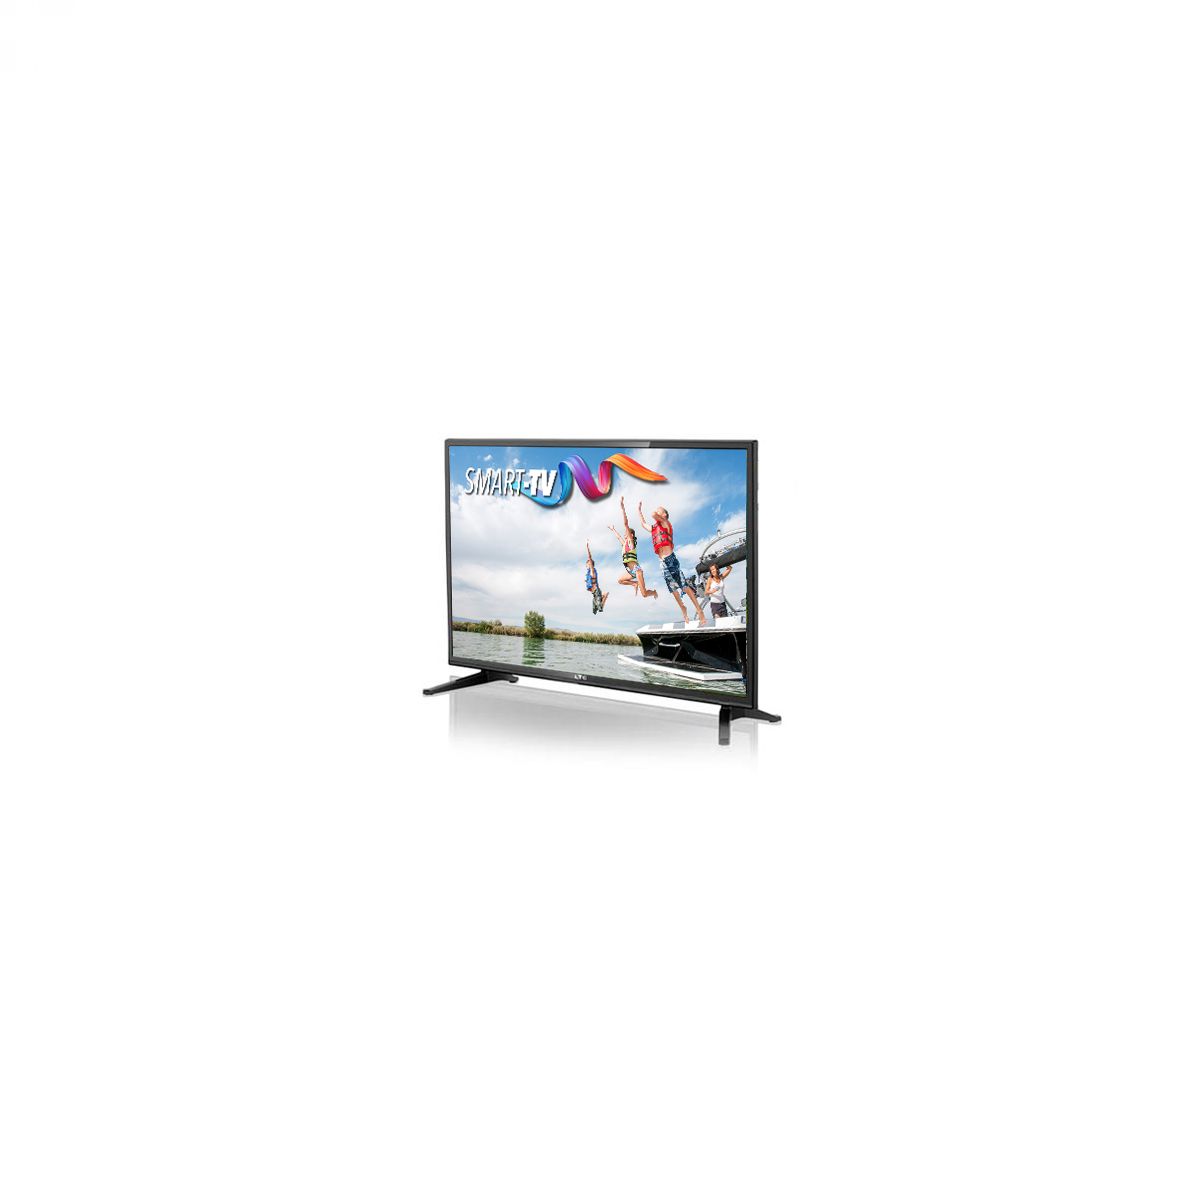 LTC 2209 Smart LED TV 12V 22” Full HD Android